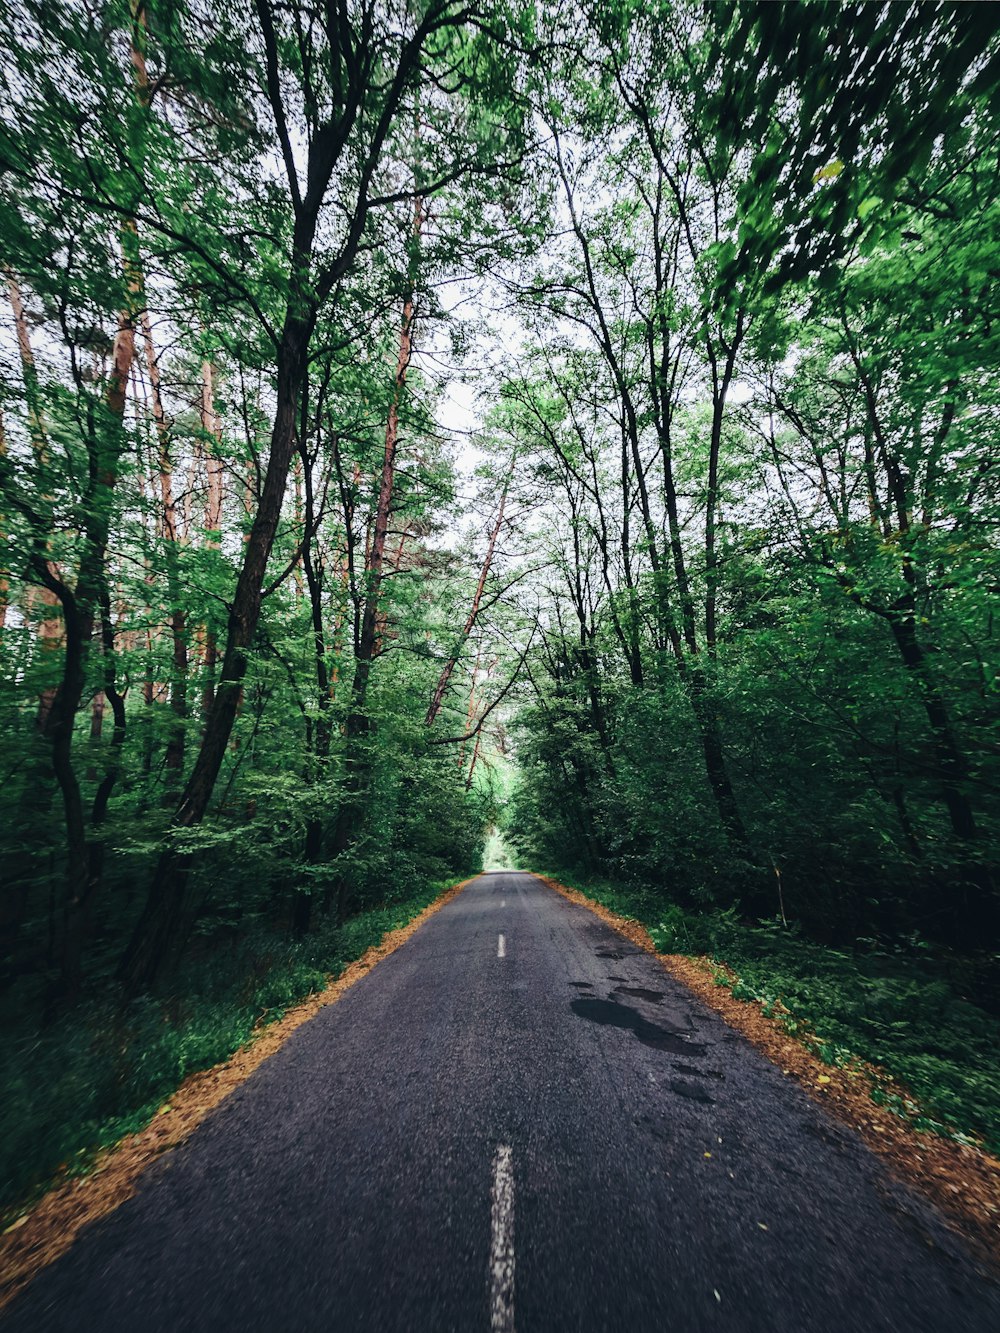 empty concrete road between trees